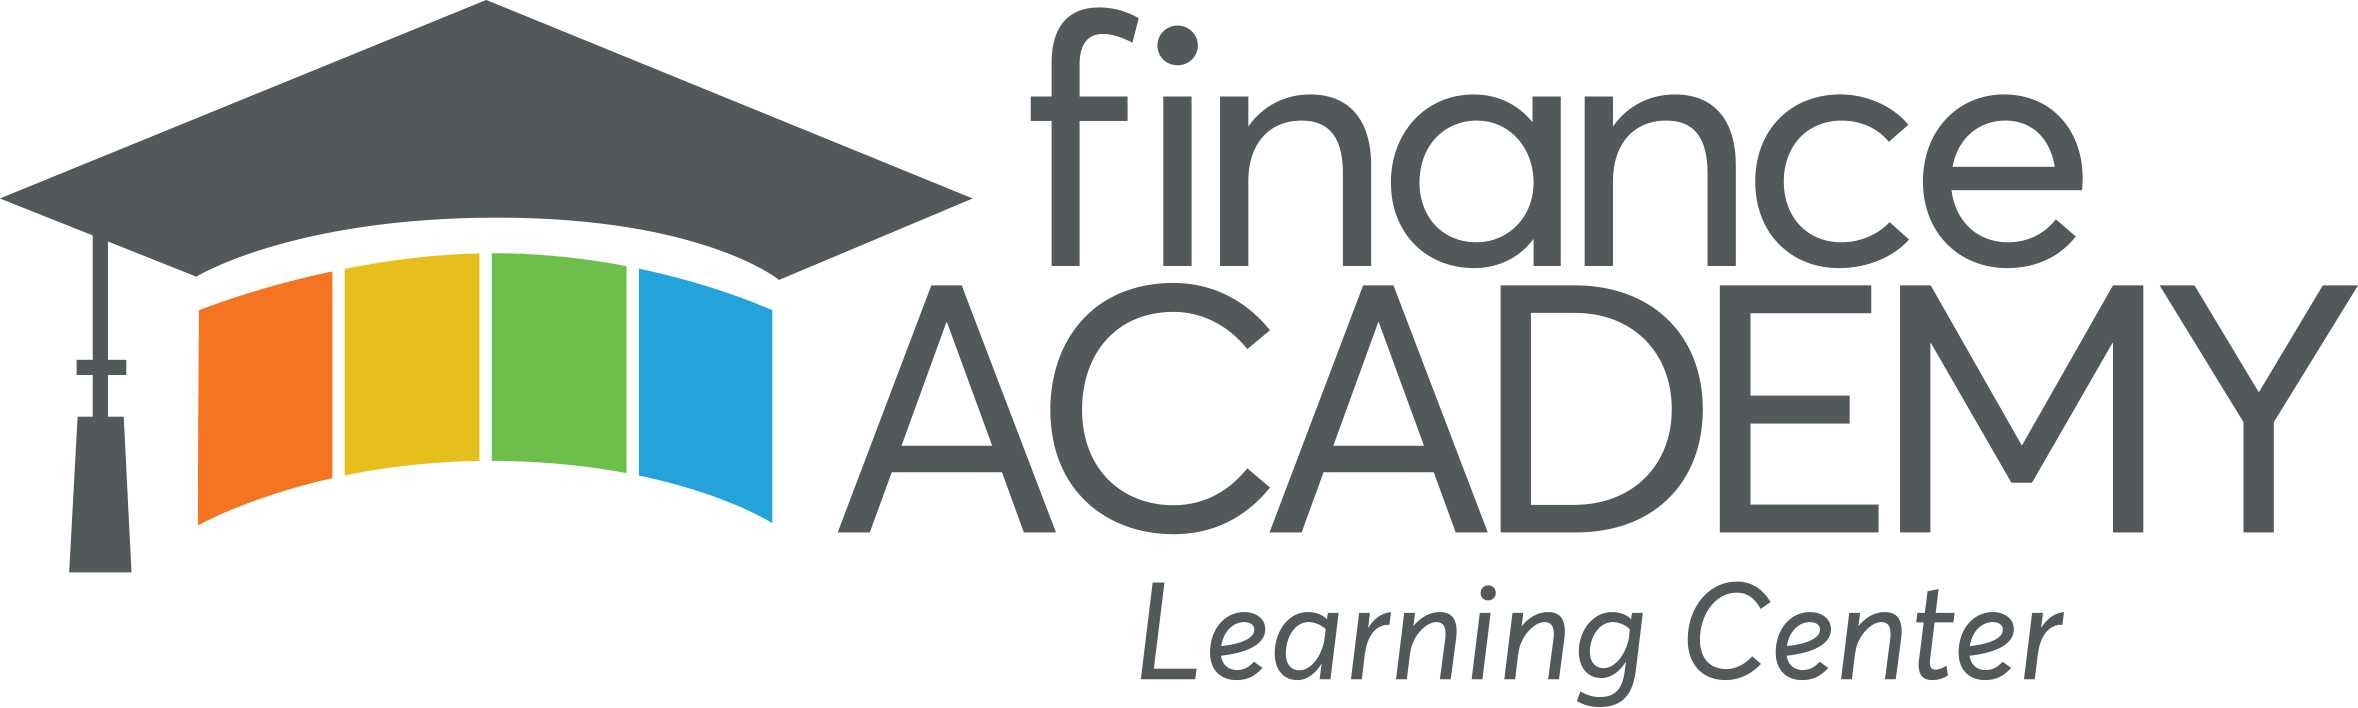 Finance Academy Learning Center Logo